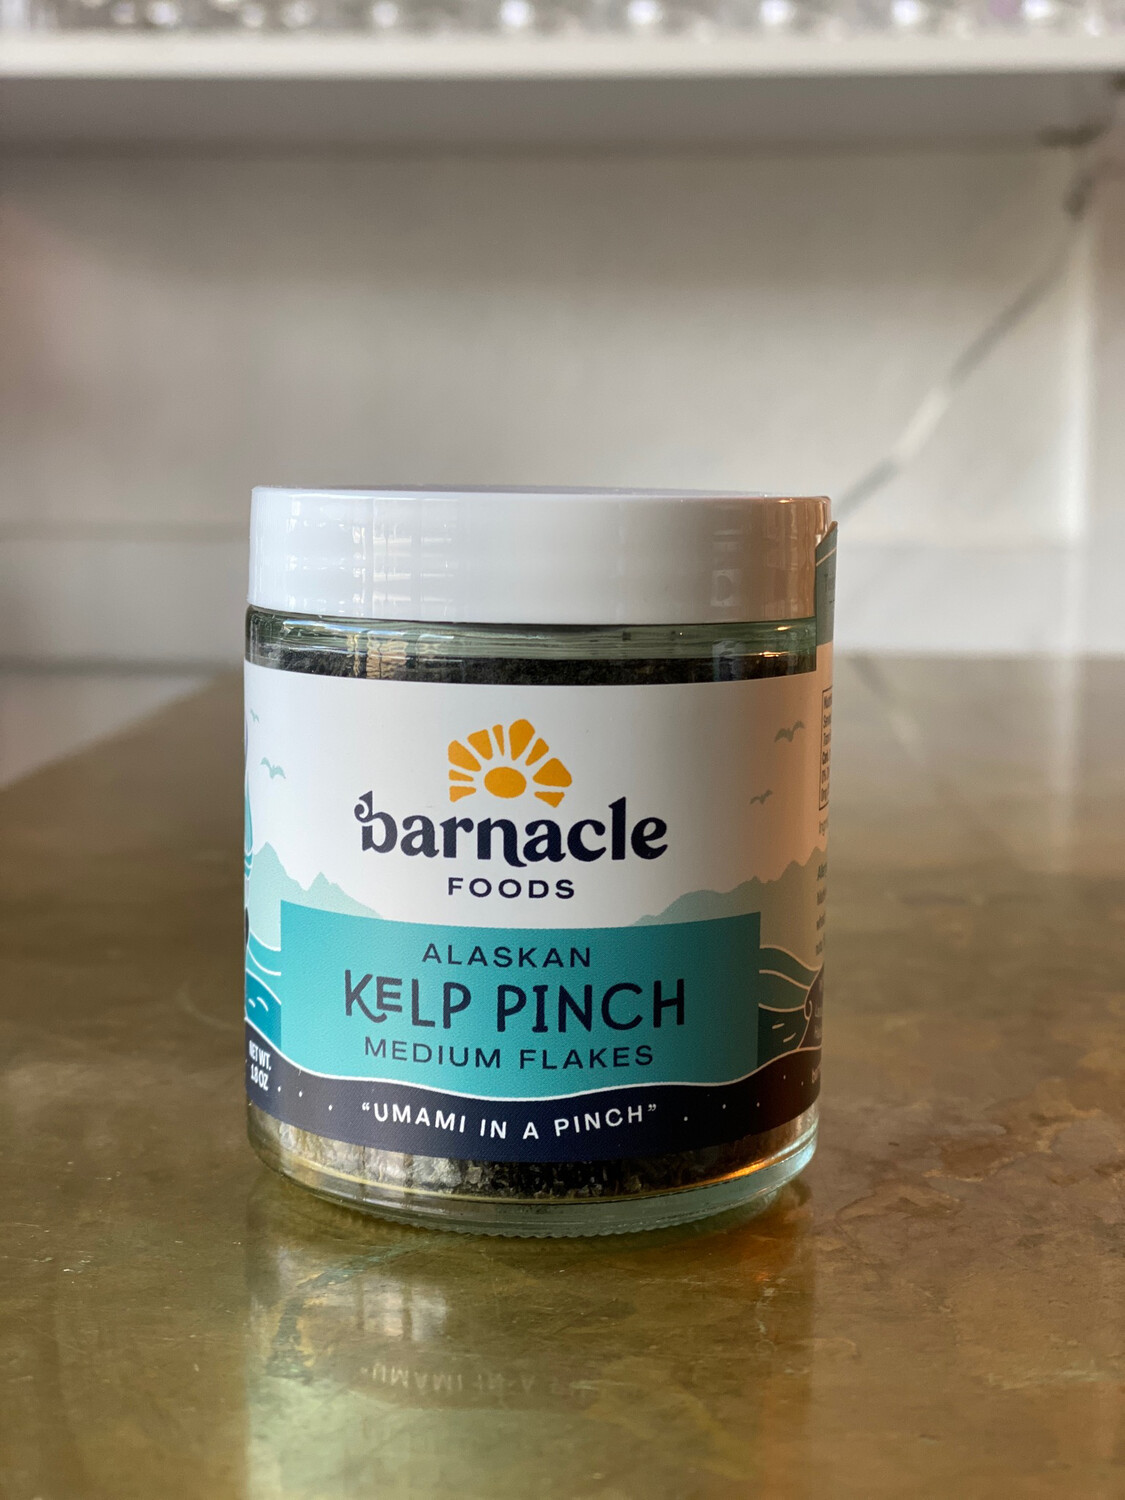 Barnacle Kelp Pinch Medium Flakes